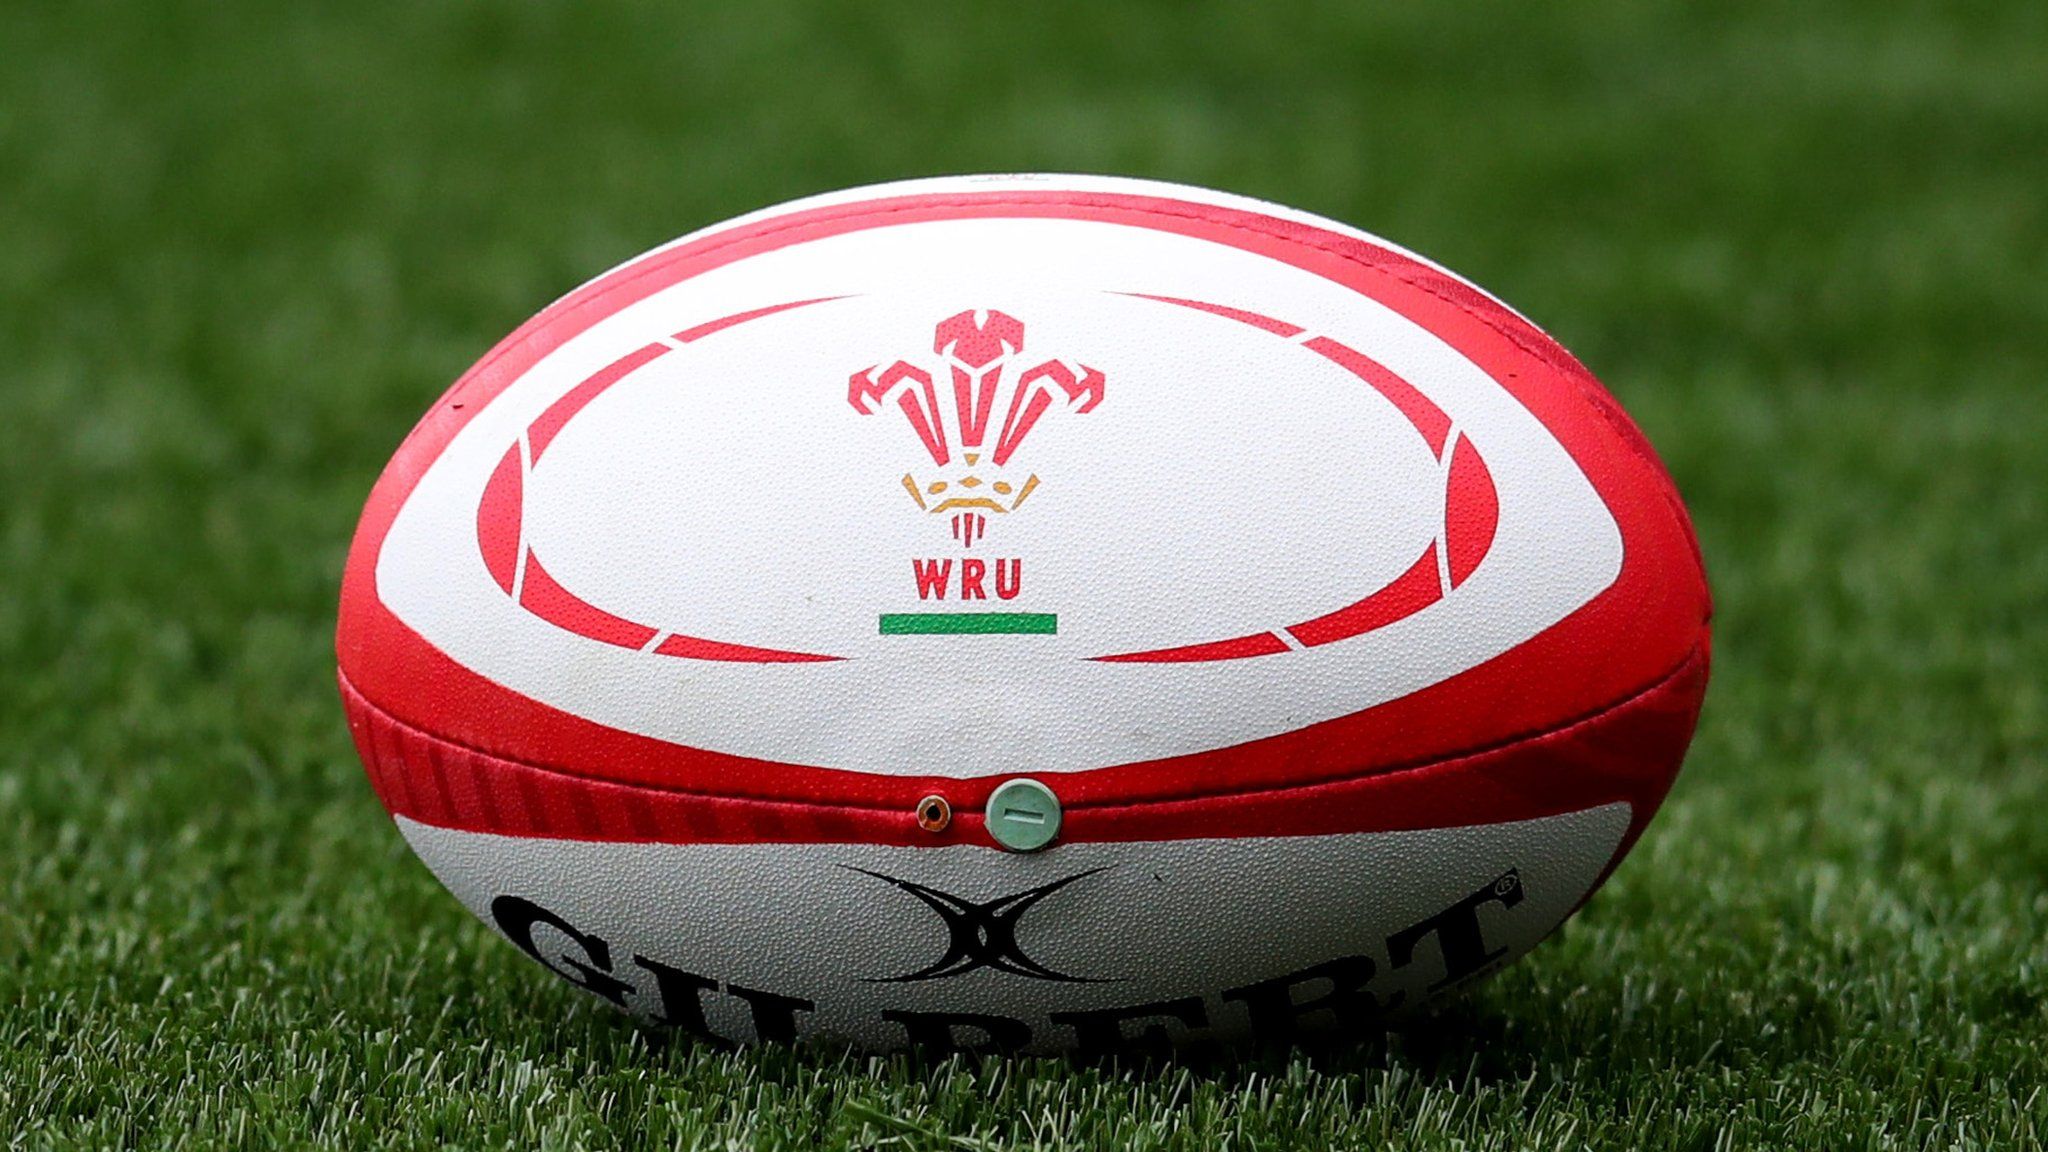 Welsh regional rugby - Wikipedia